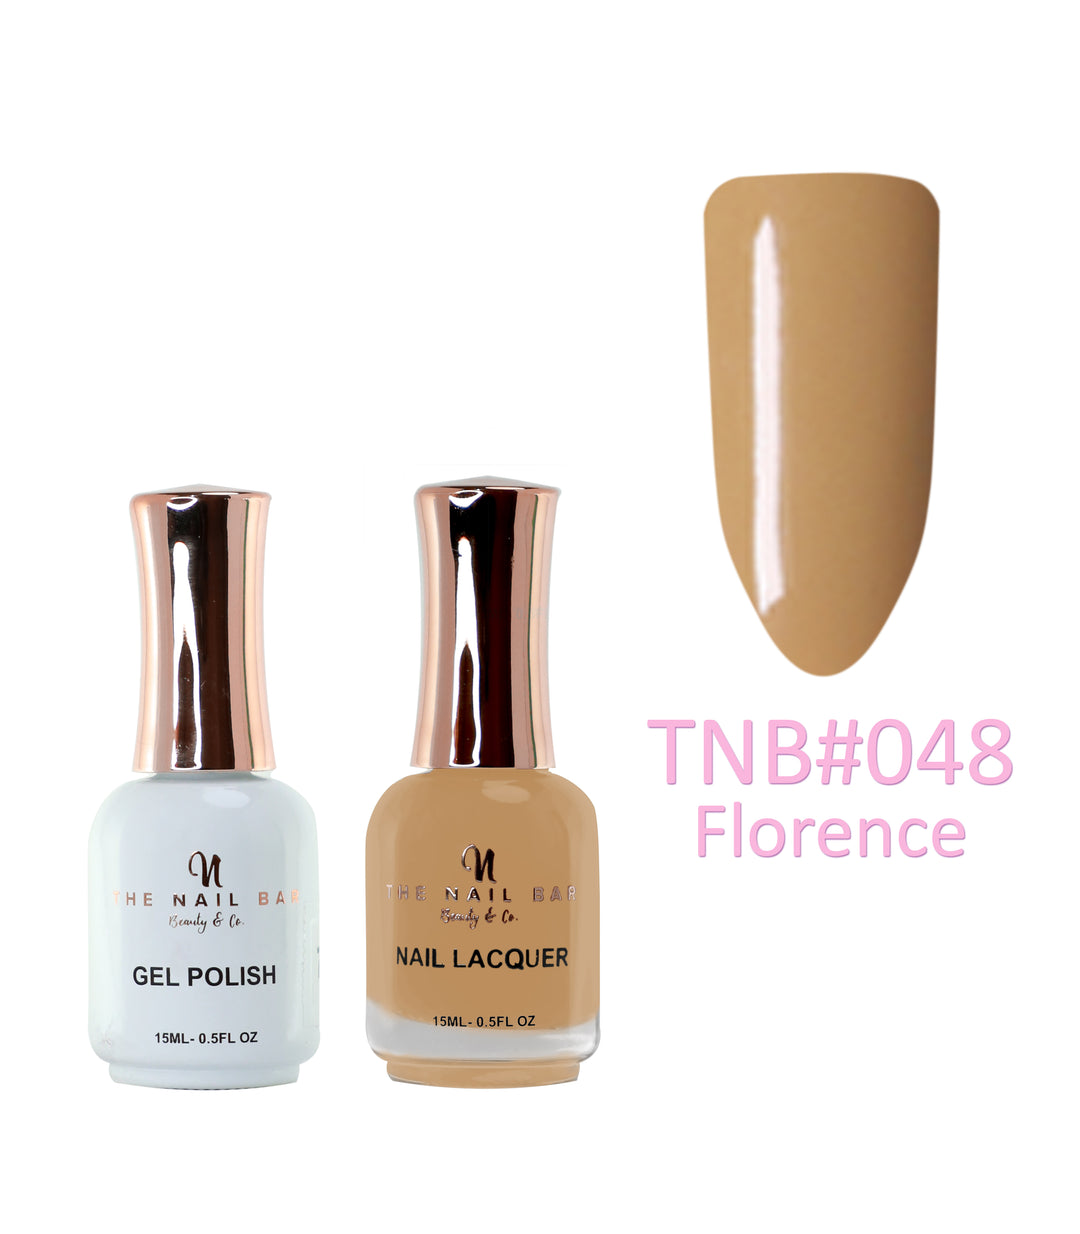 Dual Polish/Gel colour matching (15ml) - Florence - The Nail Bar Beauty & Co.